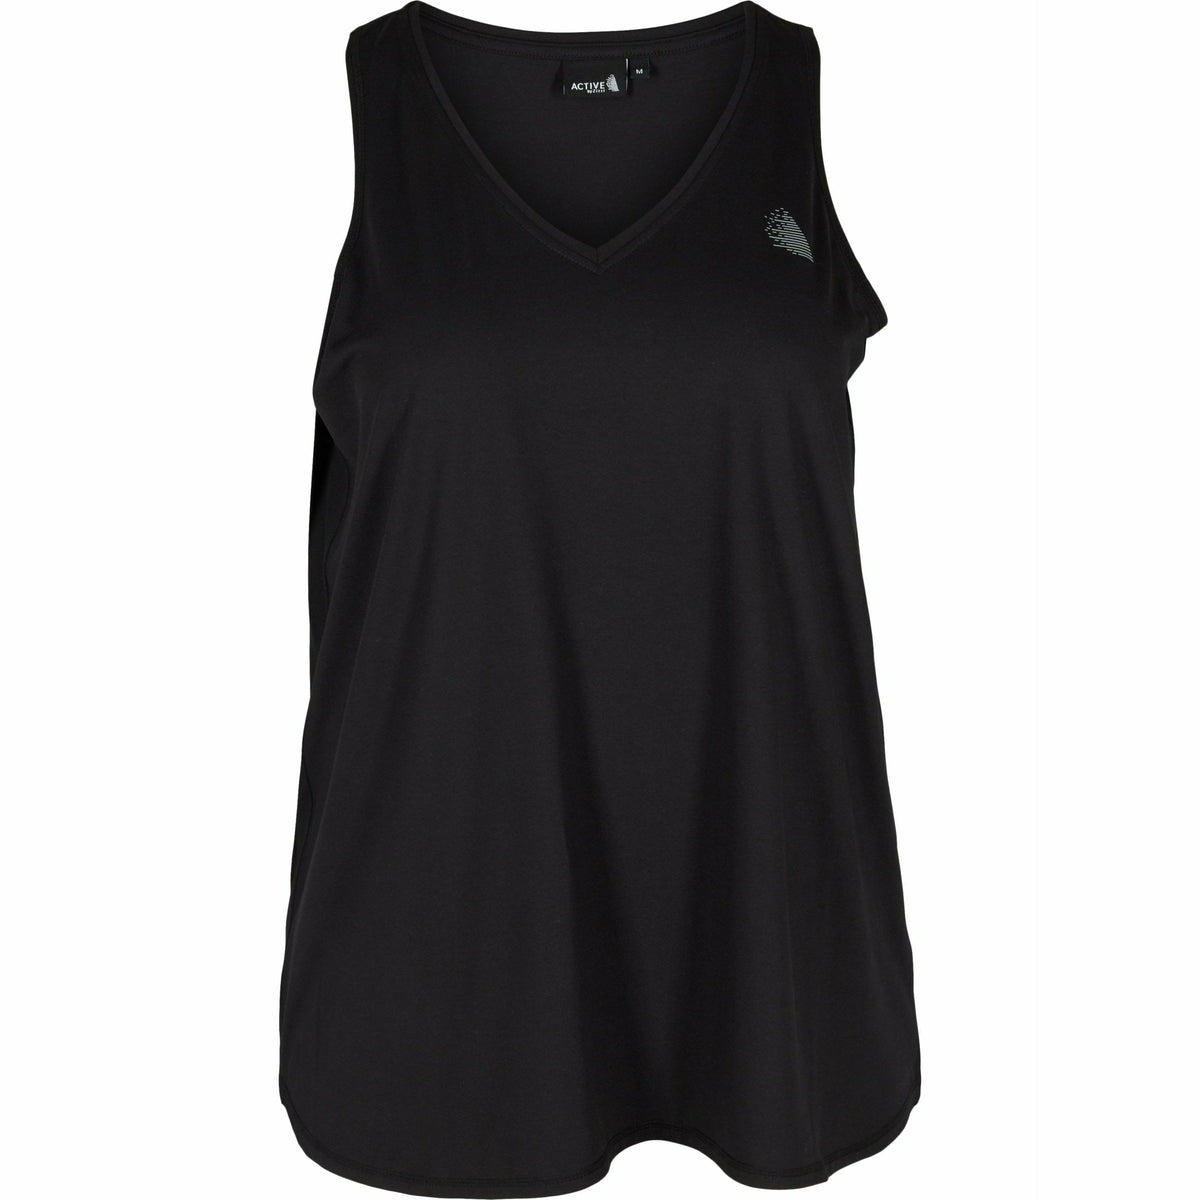 Zizzi Activewear Tank Top in Black - Wardrobe Plus